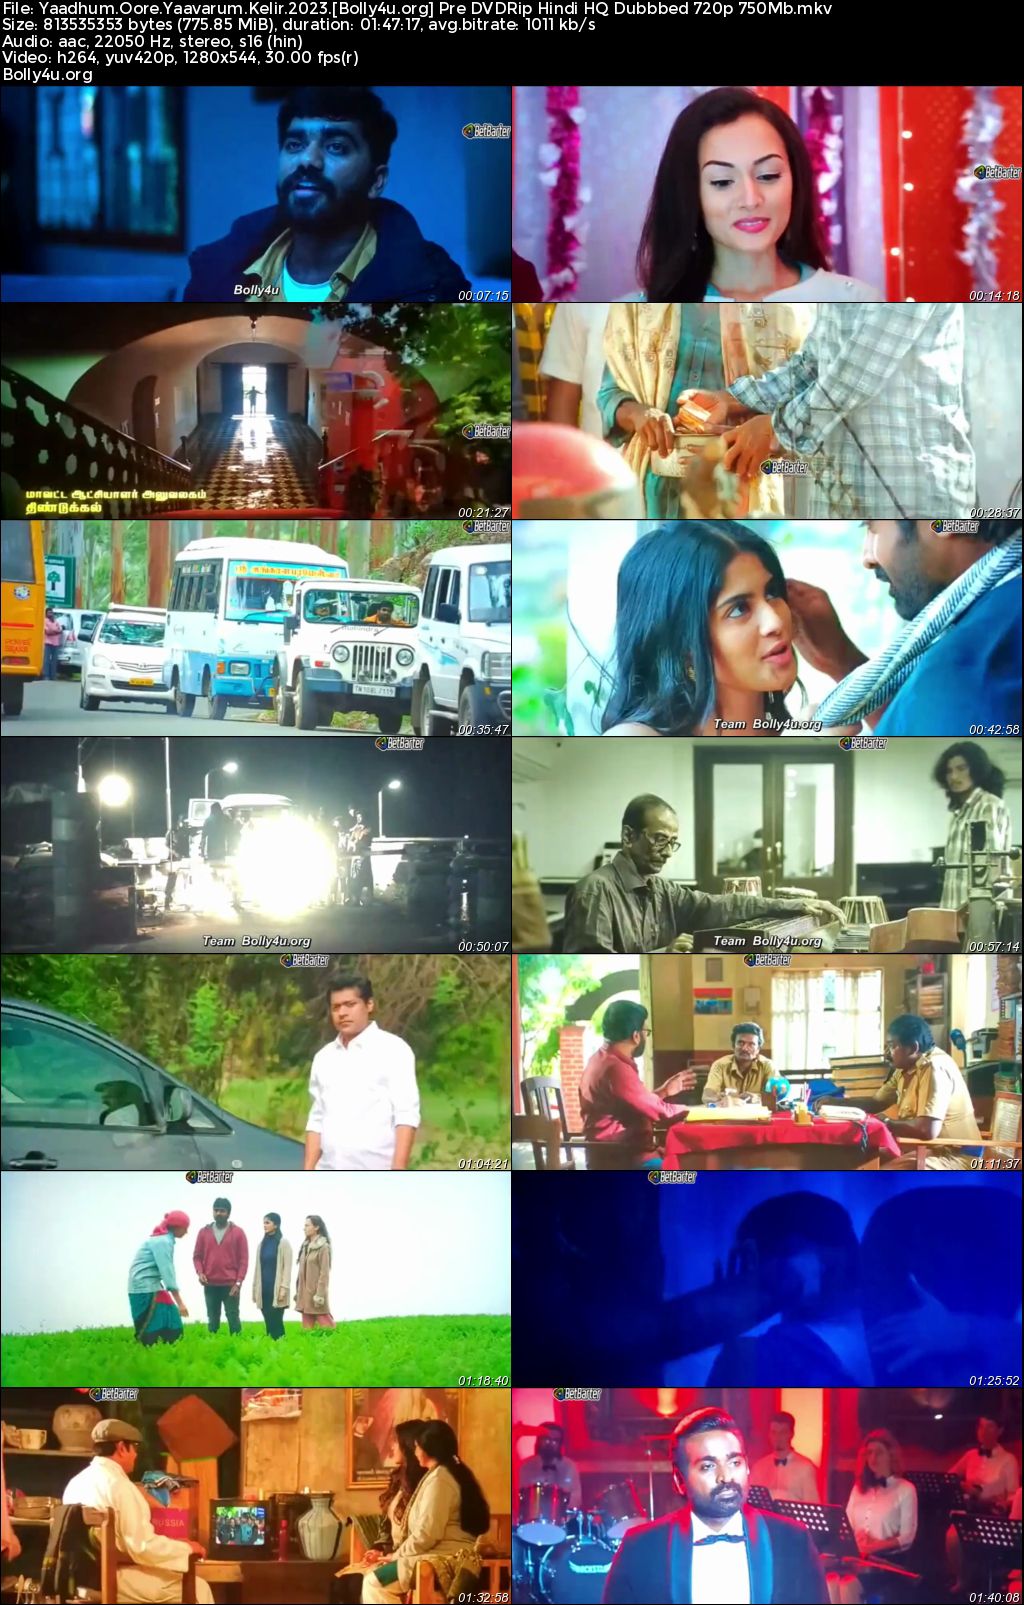 Yaadhum Oore Yaavarum Kelir 2023 Pre DVDRip Hindi HQ Dubbed Full Movie Download 1080p 720p 480p